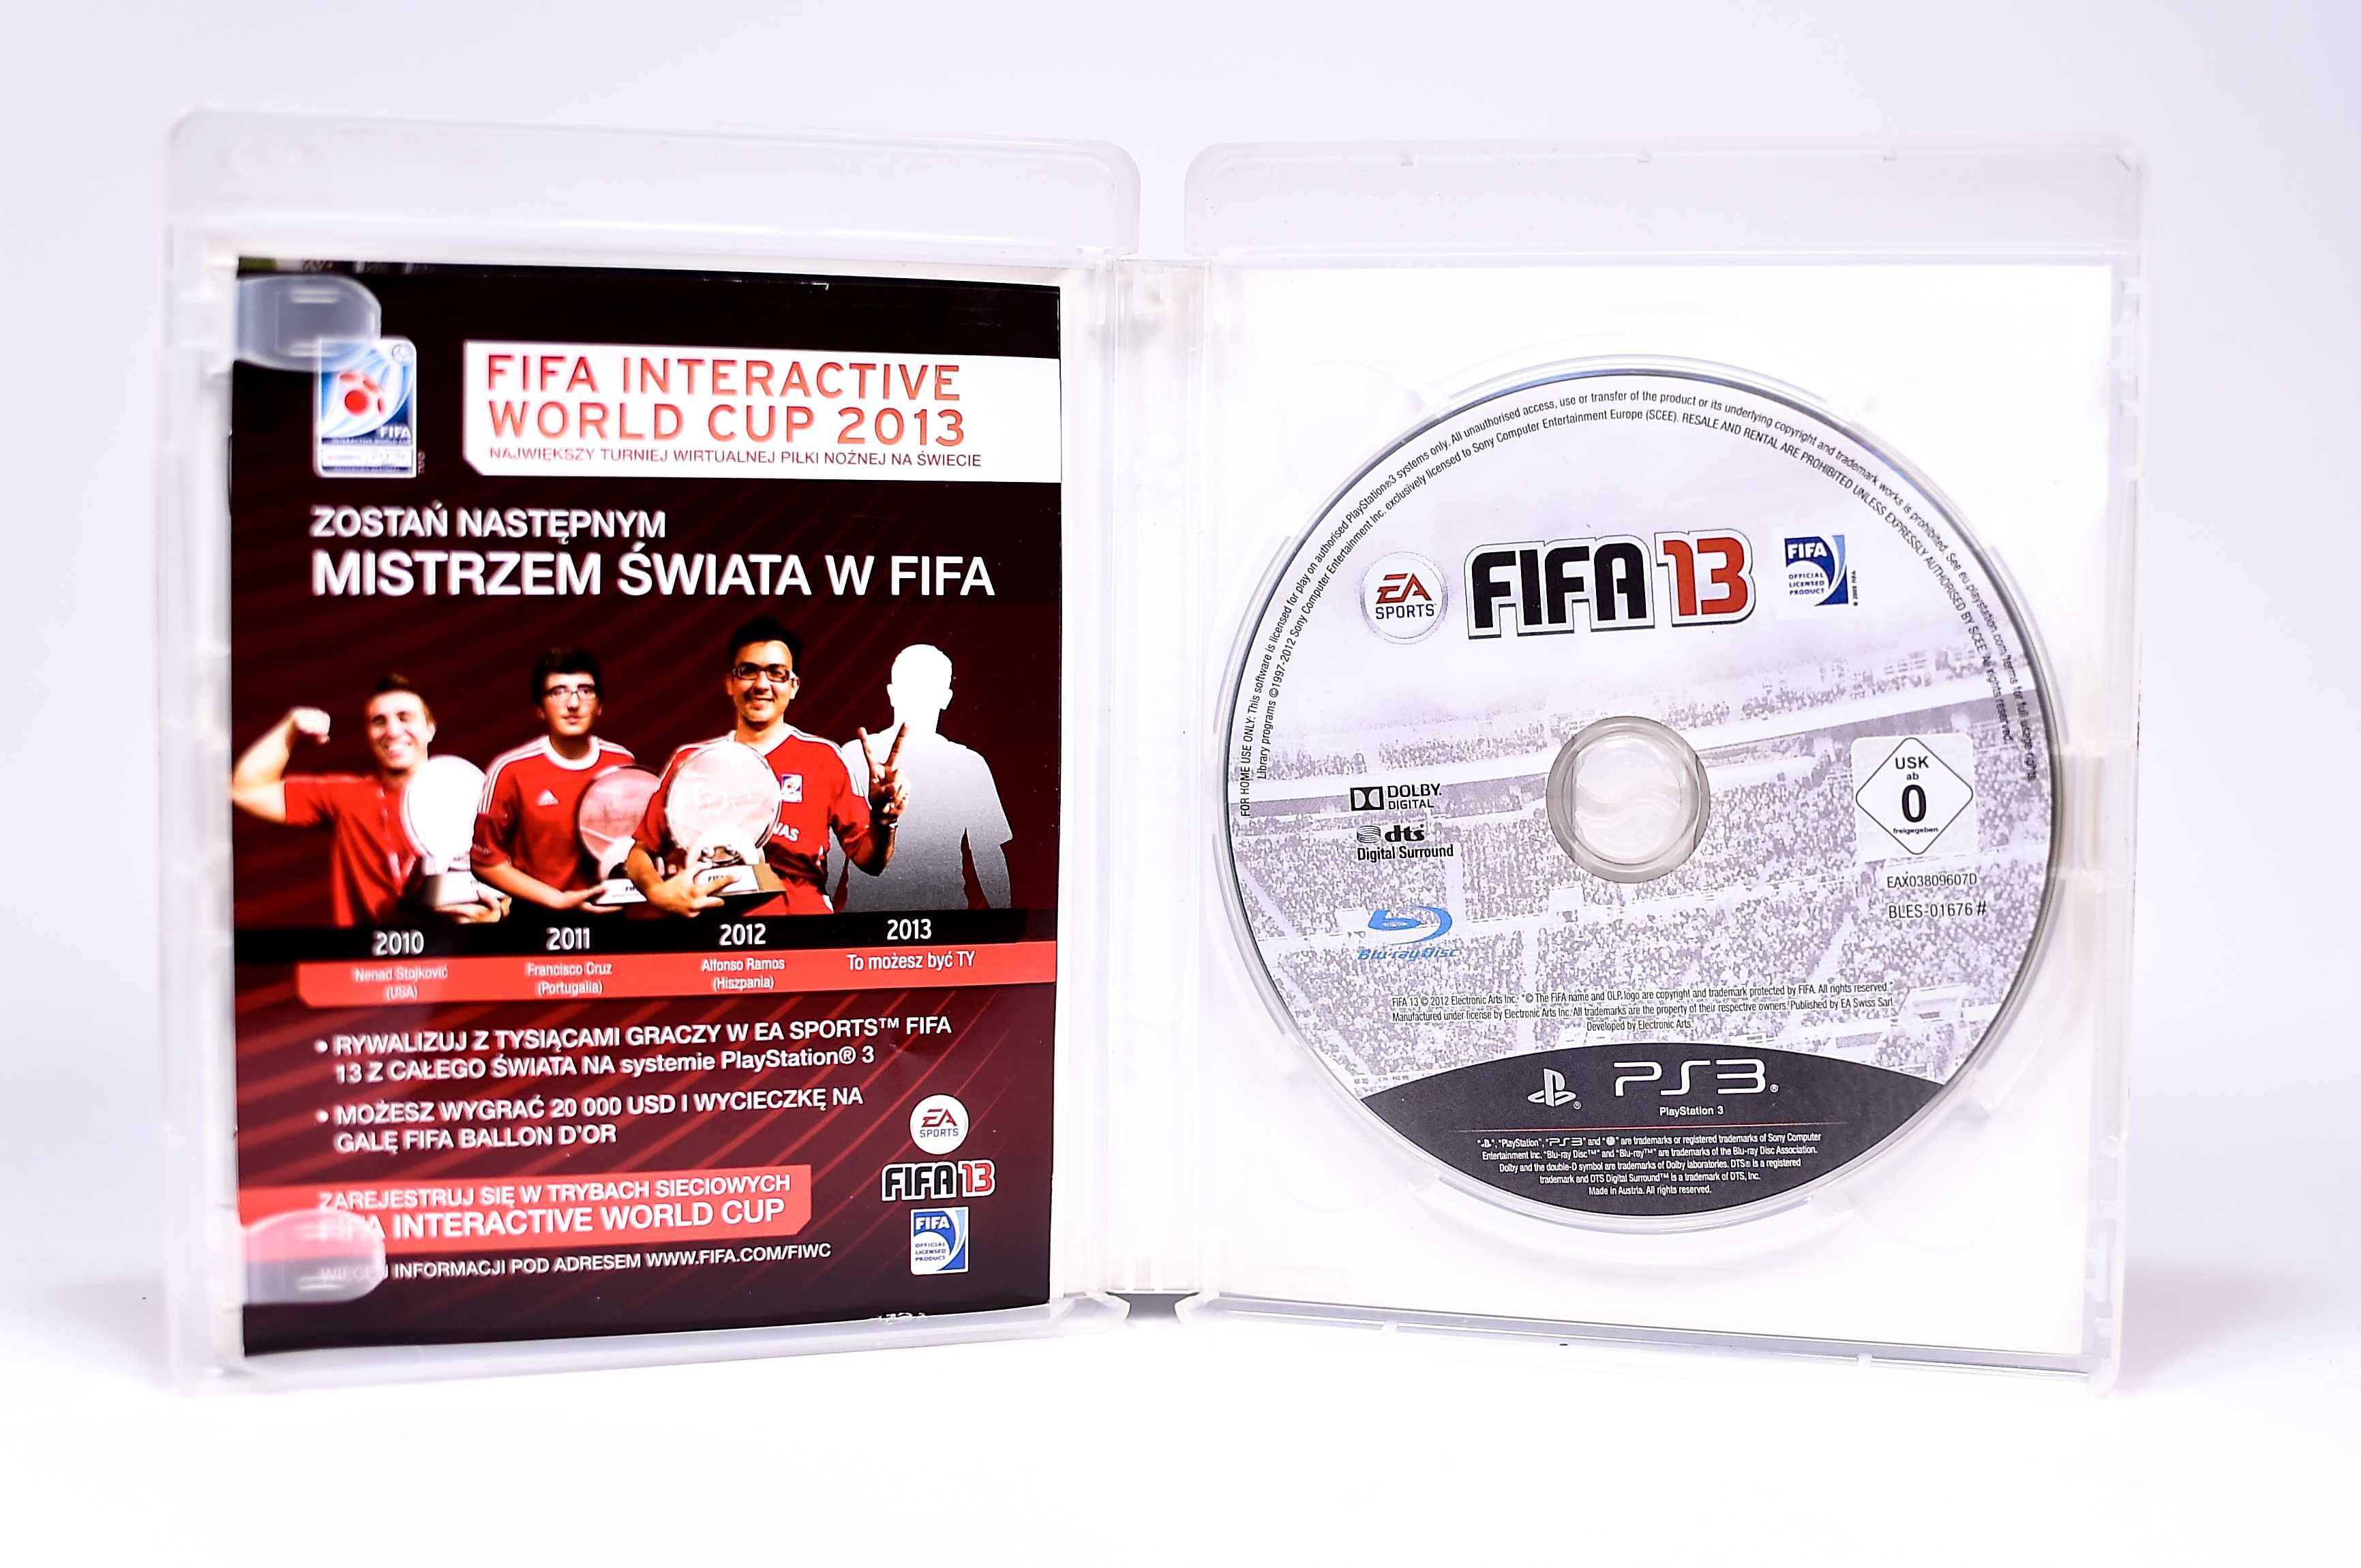 PS3 # Fifa 13 . . .